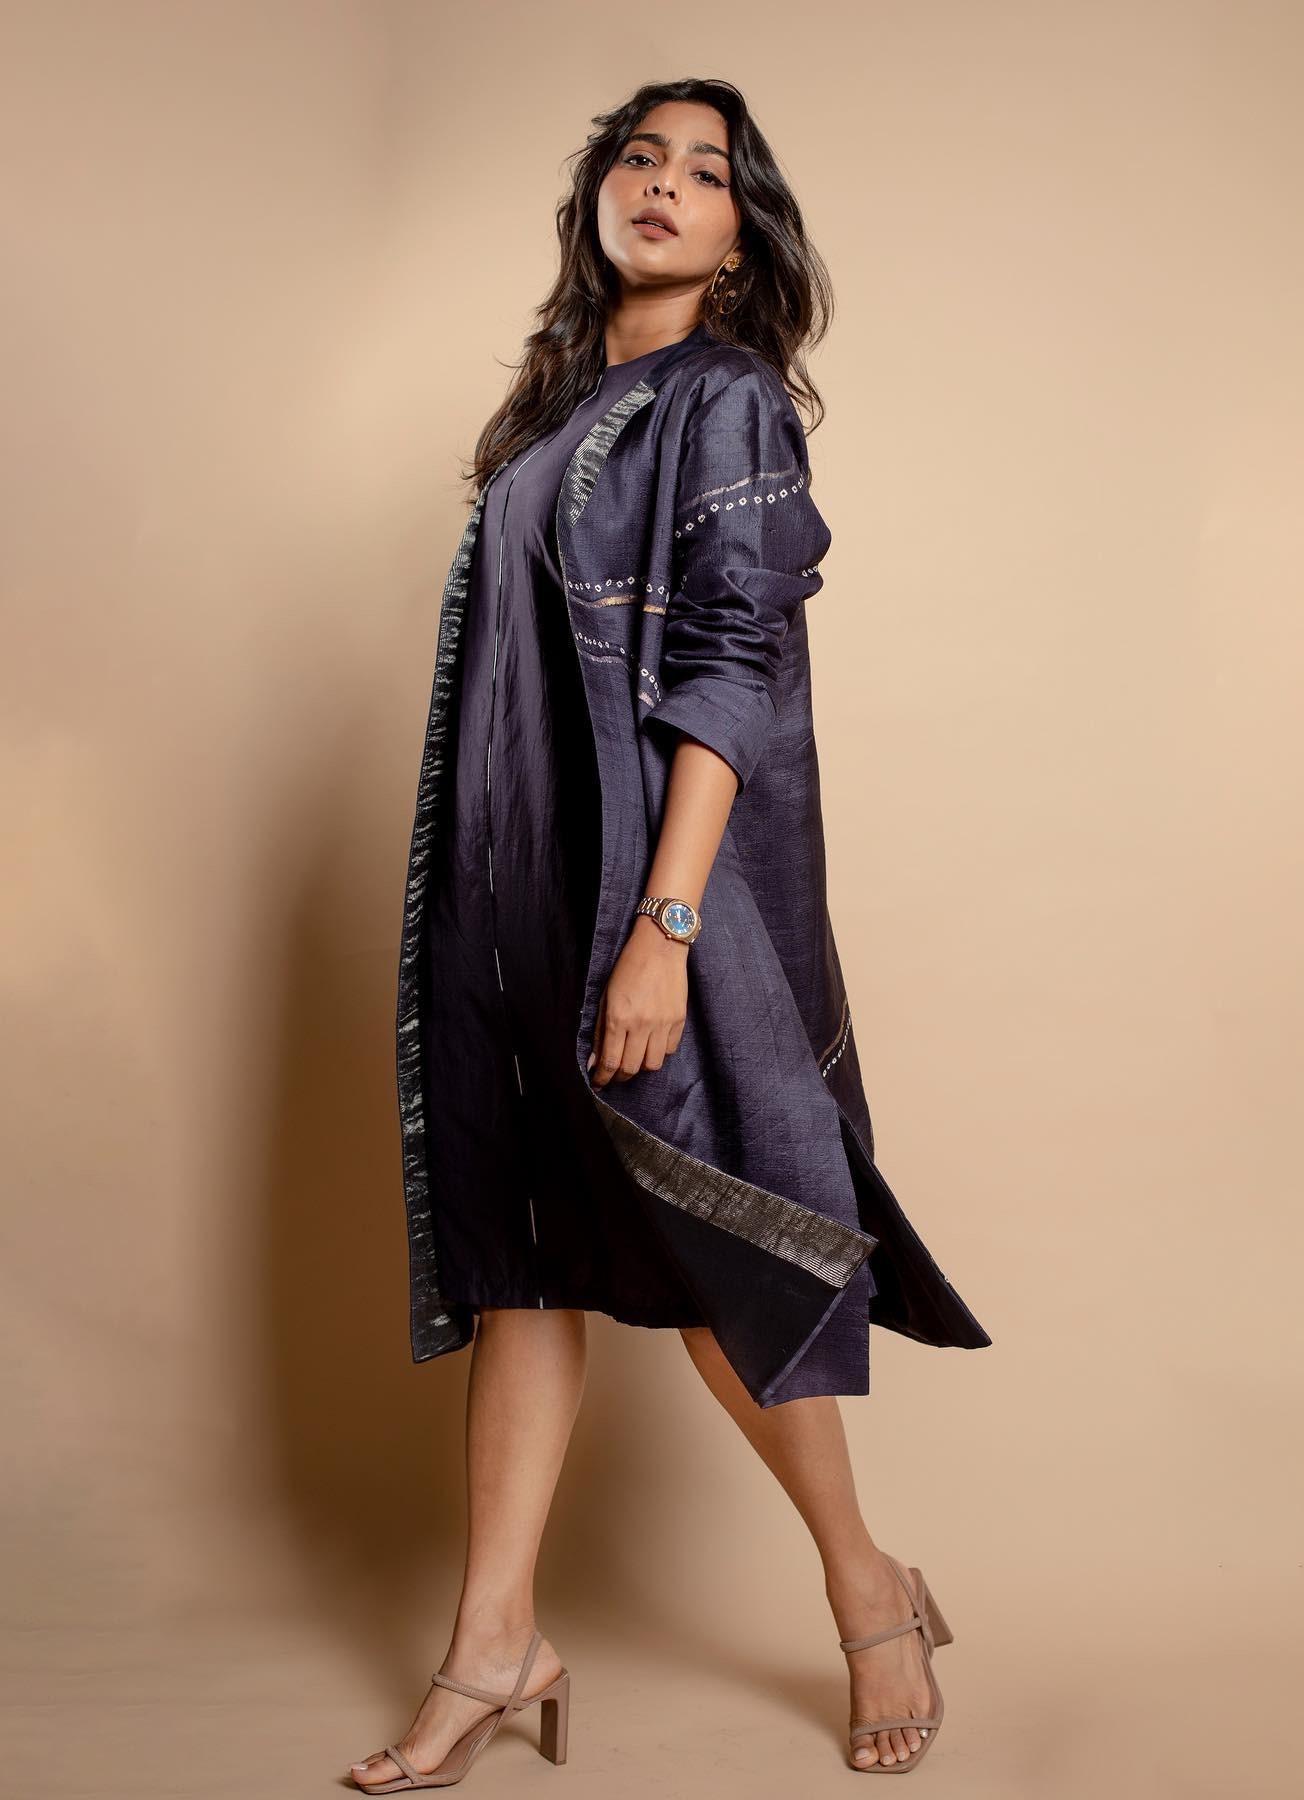 South Actress Aishwarya Lekshmi  In a Navy Blue Dress With Long Jacket